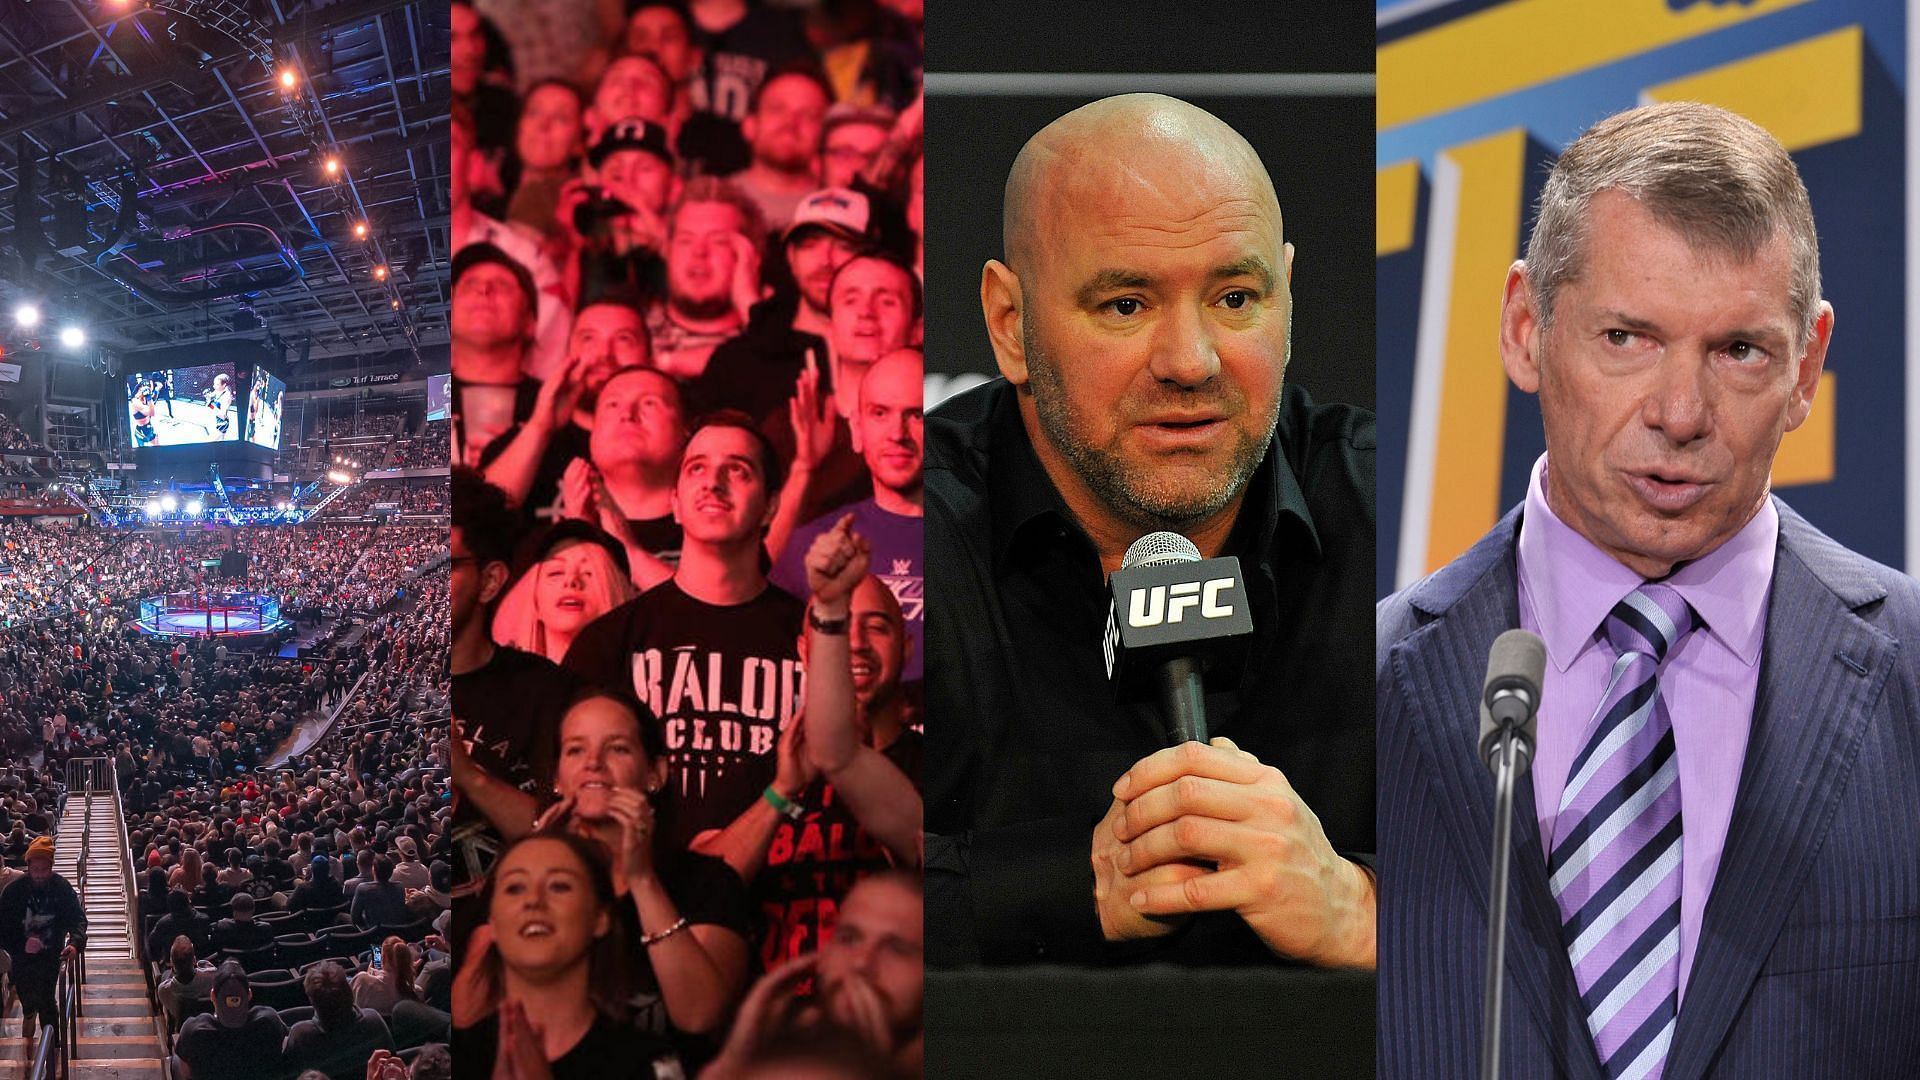 WWE &amp; UFC fans (left), Dana White (centre), Vince McMahon (right) [Images courtesy of @wwe &amp; @ufc on Instagram]